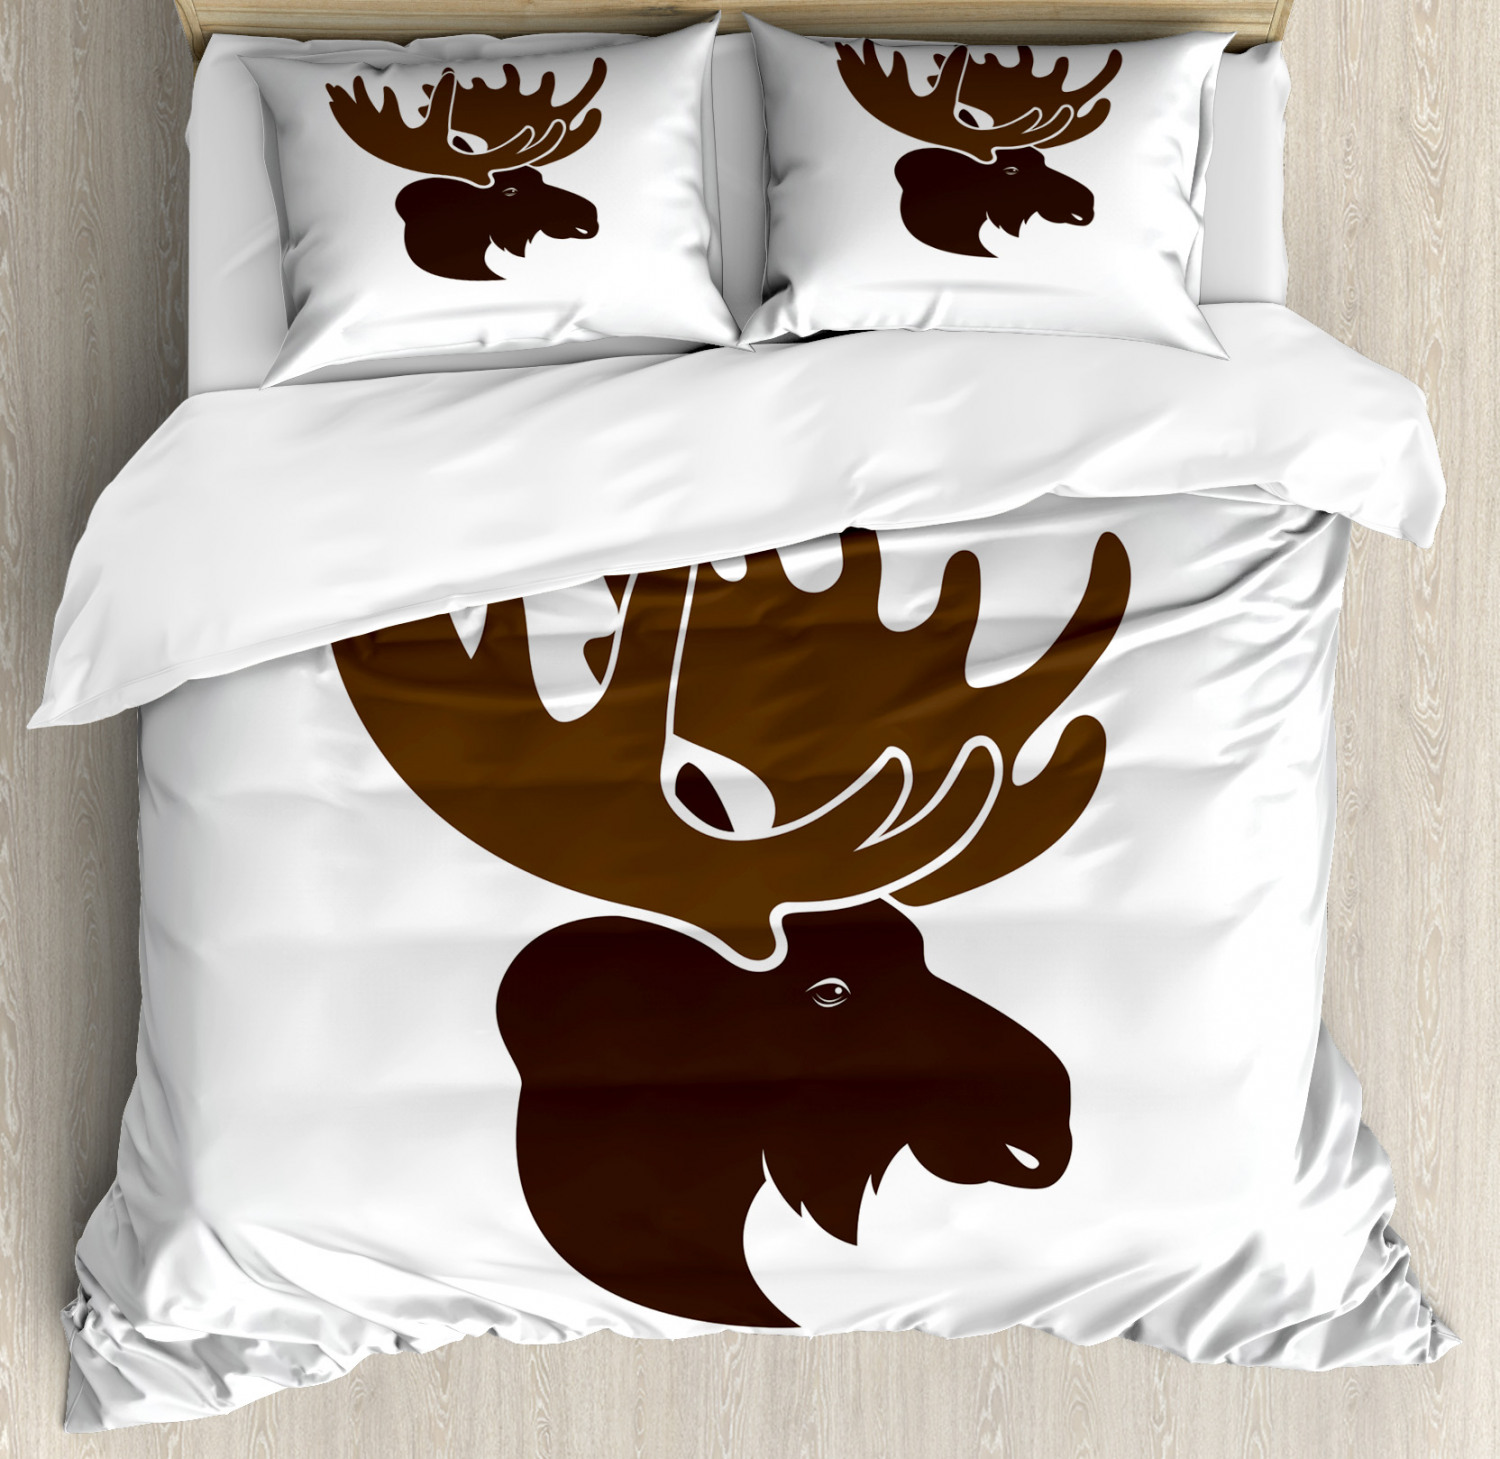 Animal Duvet Cover Set With Pillow Shams Canadian Deer Head Print